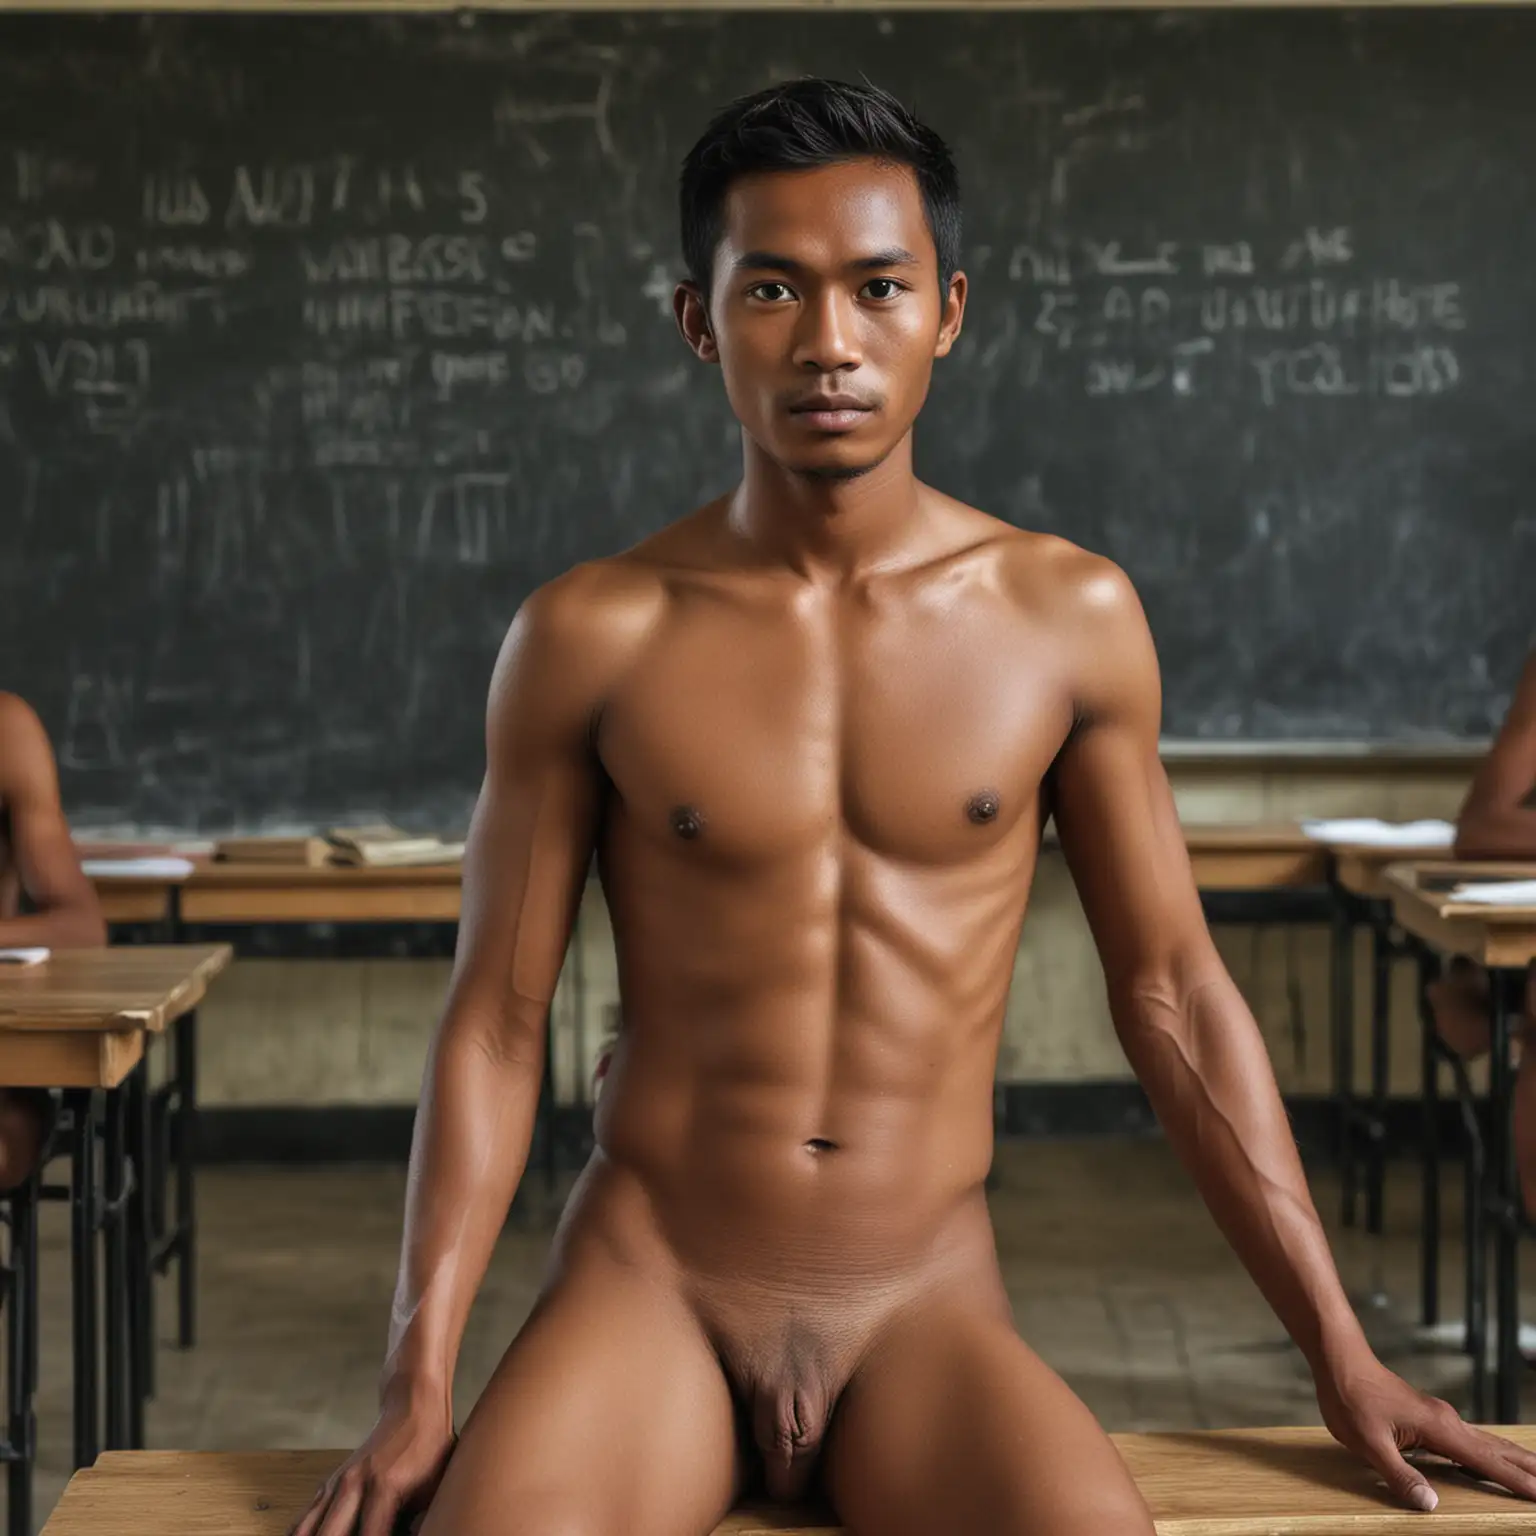 DarkSkinned-Indonesian-Man-35-Striking-a-Pose-in-Classroom-Setting